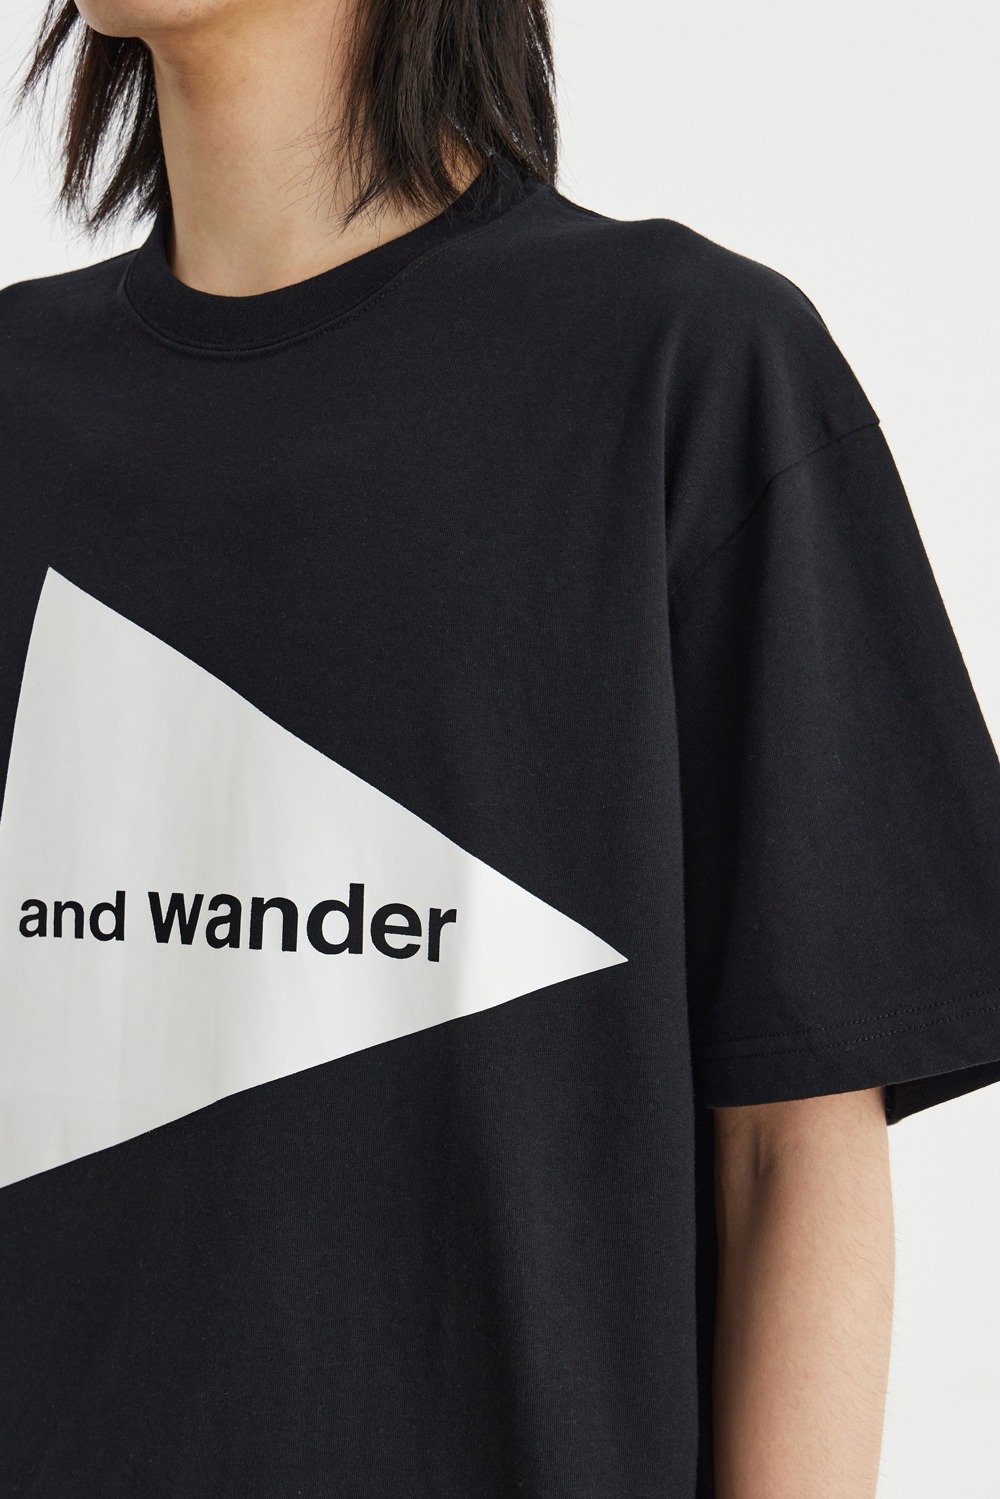 And Wander Big Logo T-Black